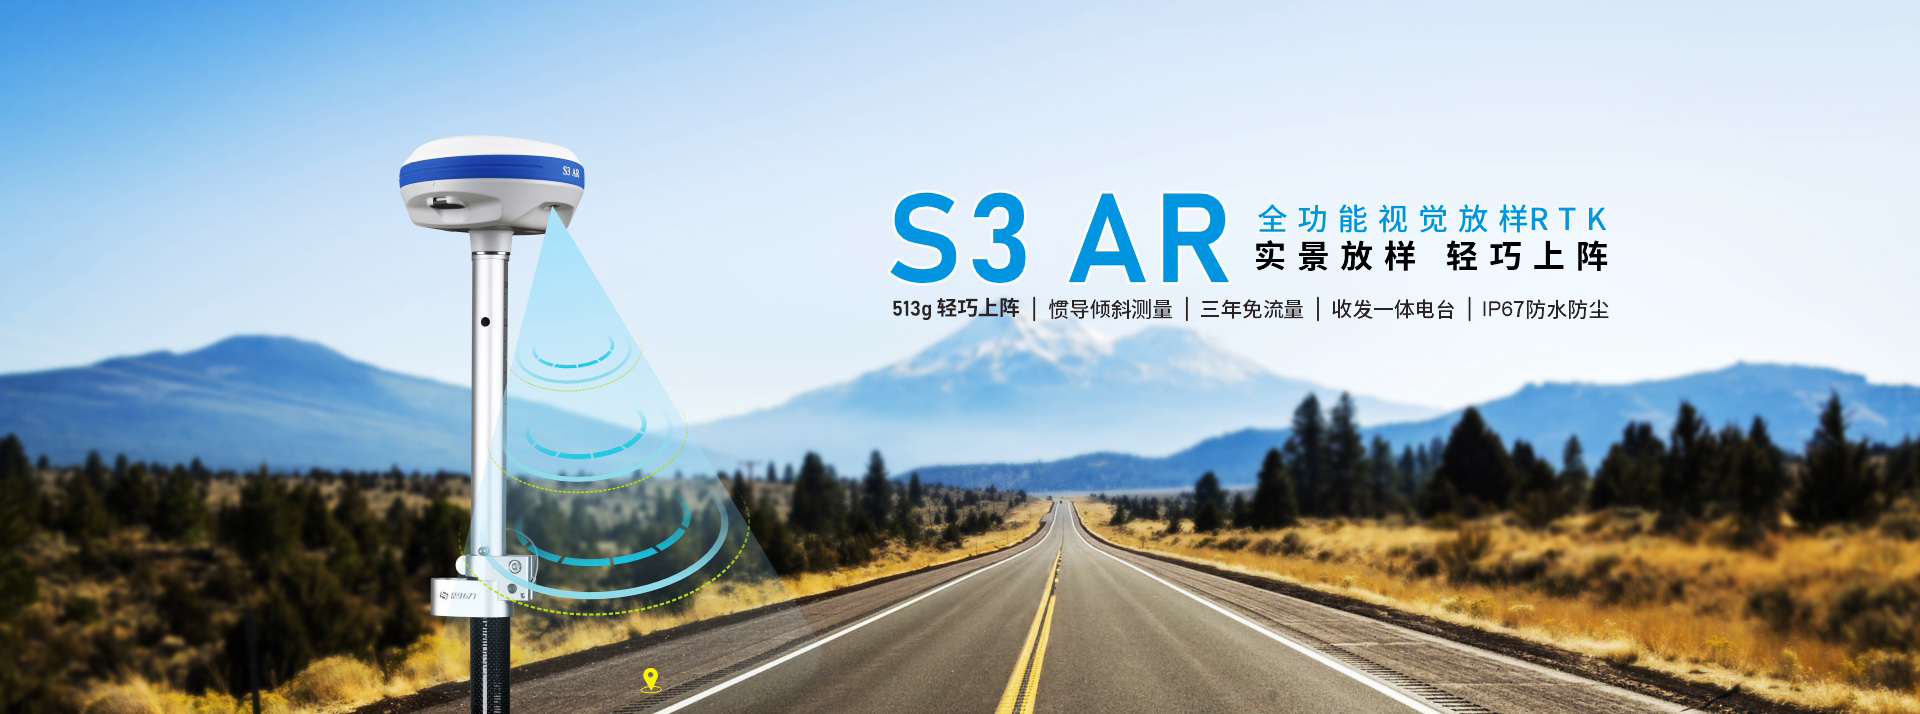 S3 AR 全功能视觉放样RTK